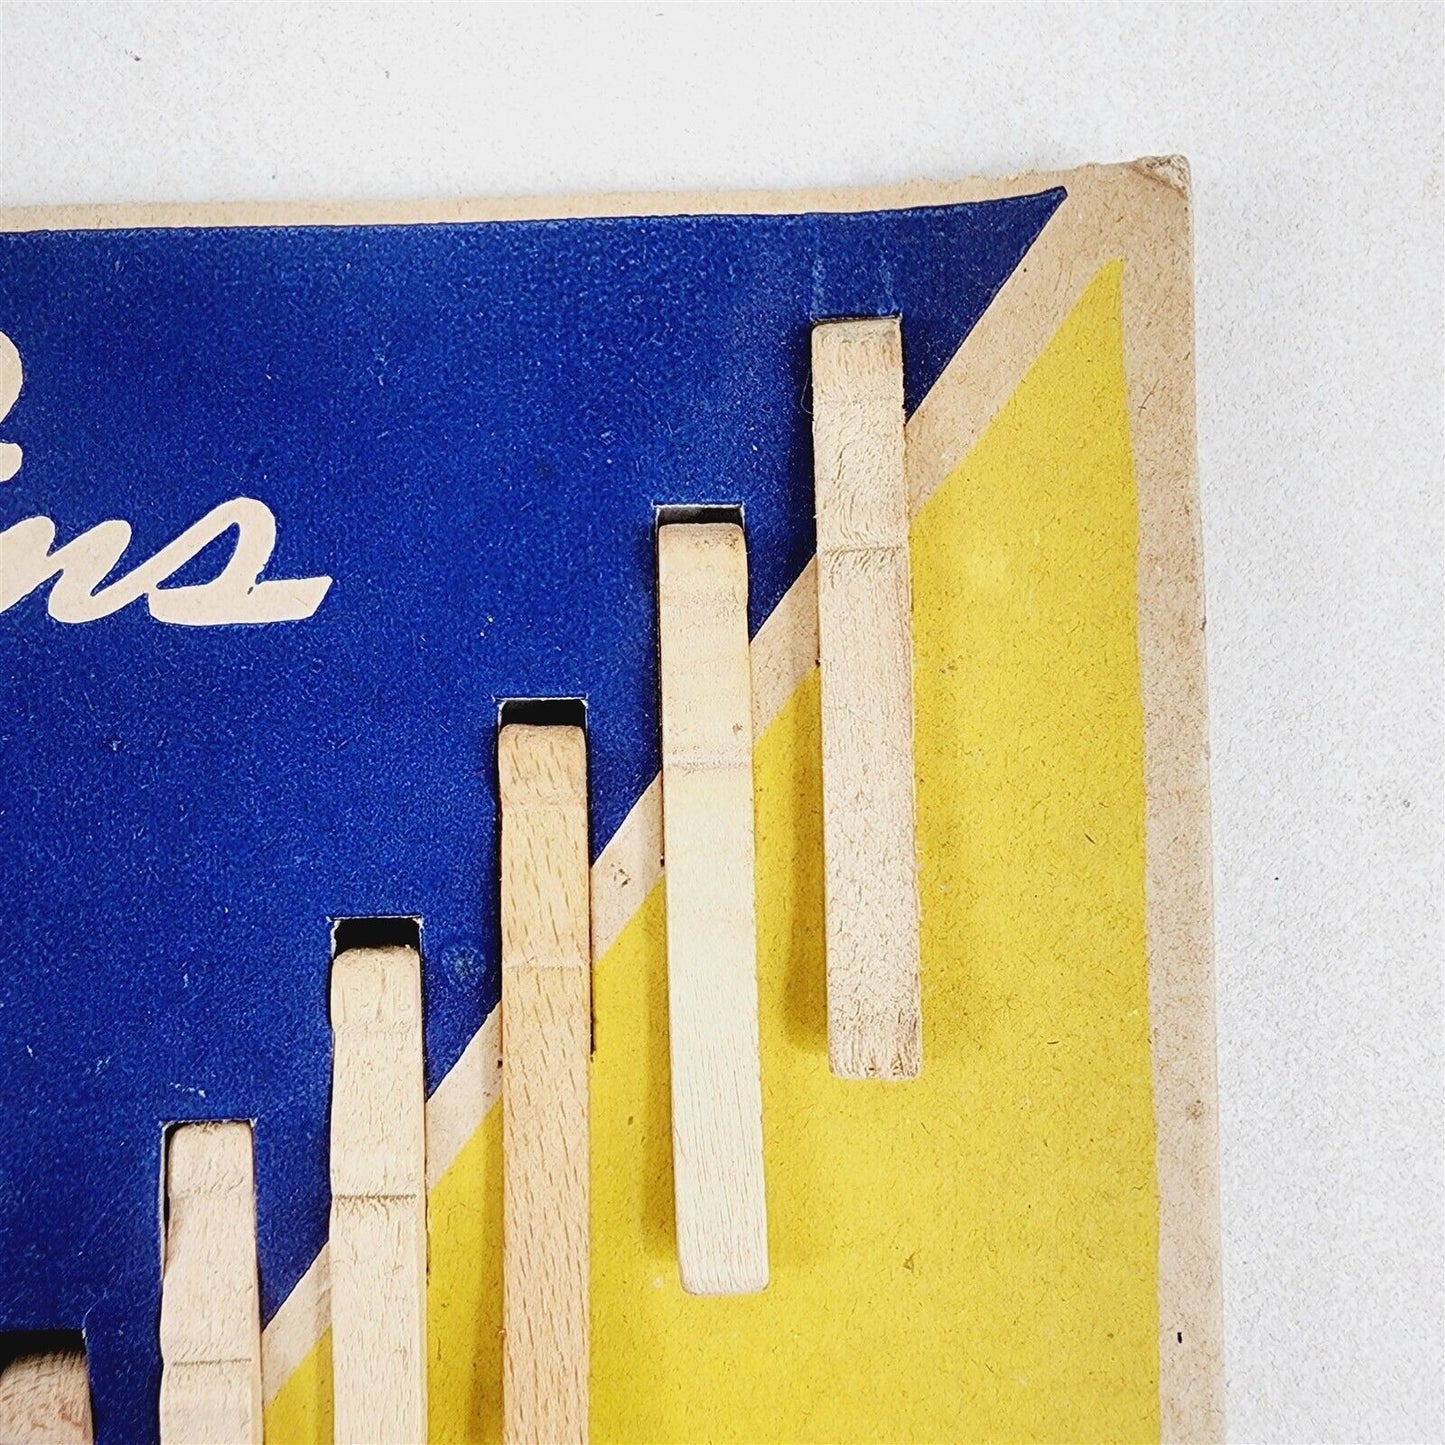 Vintage Dolly Pins 18 Wood Clothes Pins Clothespins Original Card No. 180 - #3